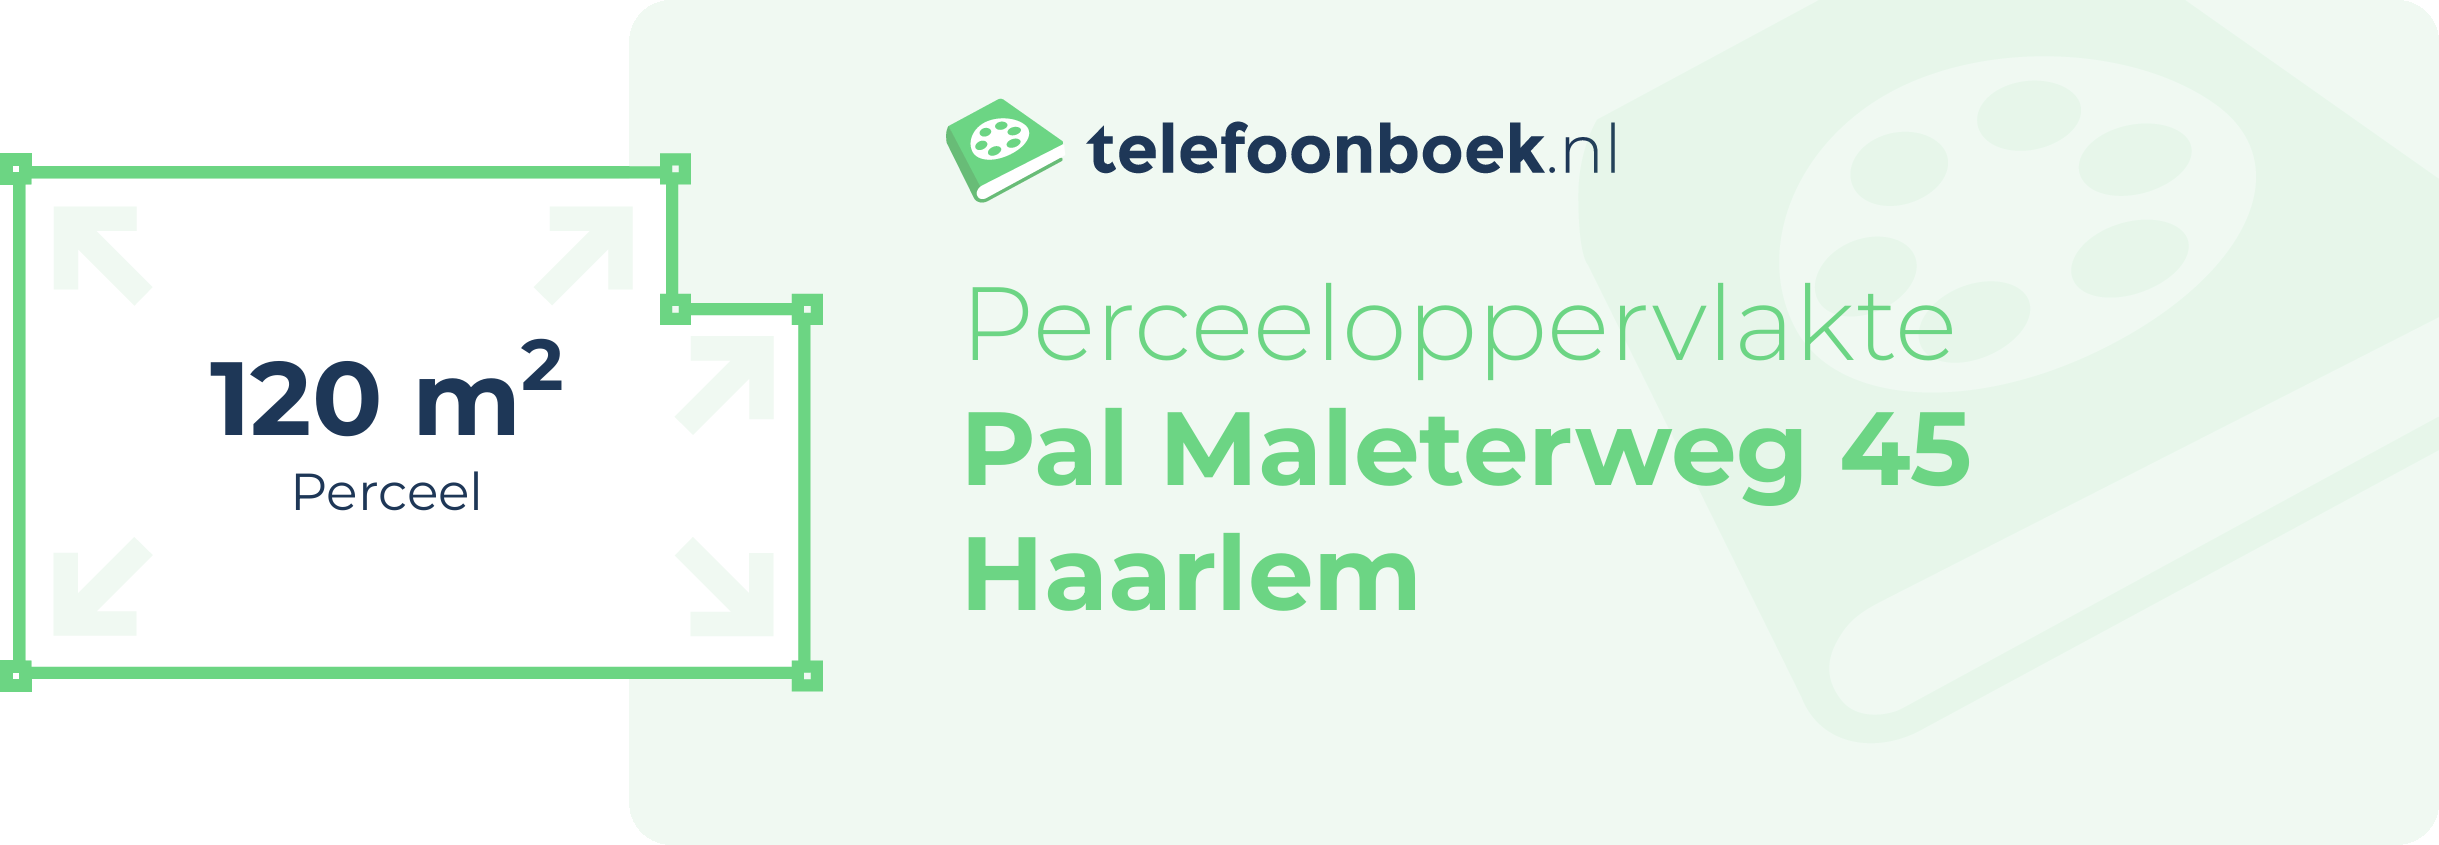 Perceeloppervlakte Pal Maleterweg 45 Haarlem